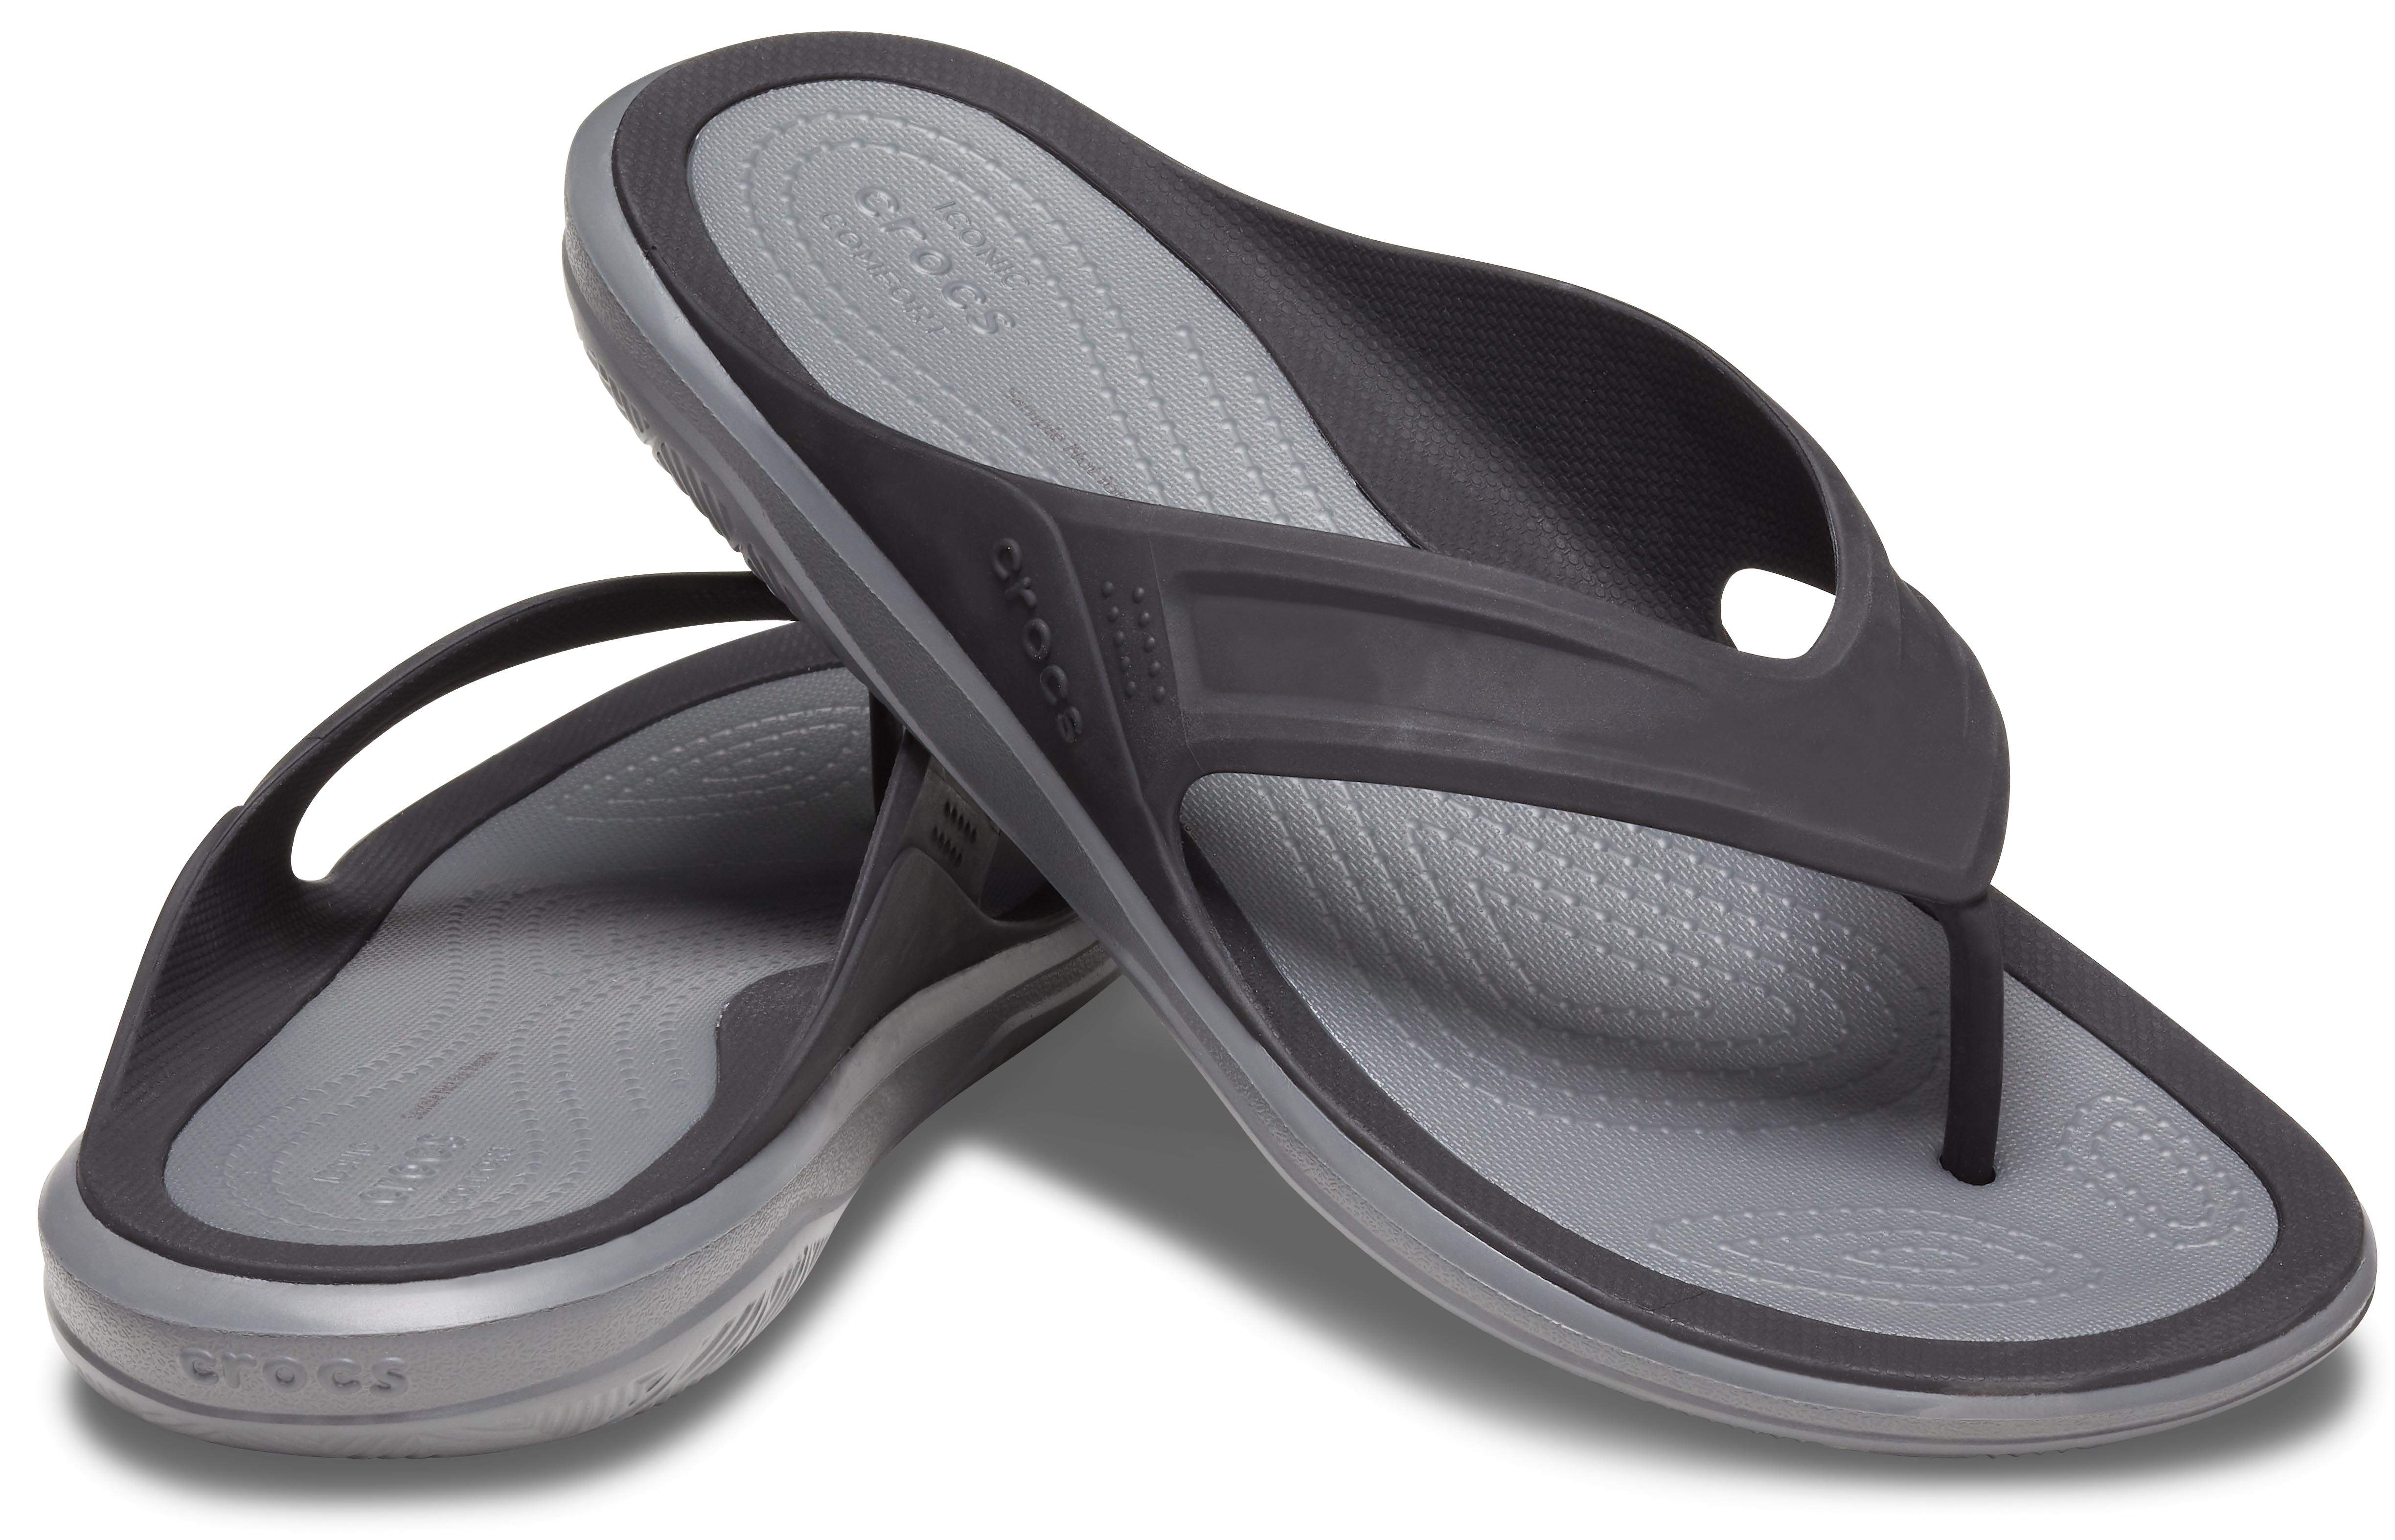 crocs sandals swiftwater